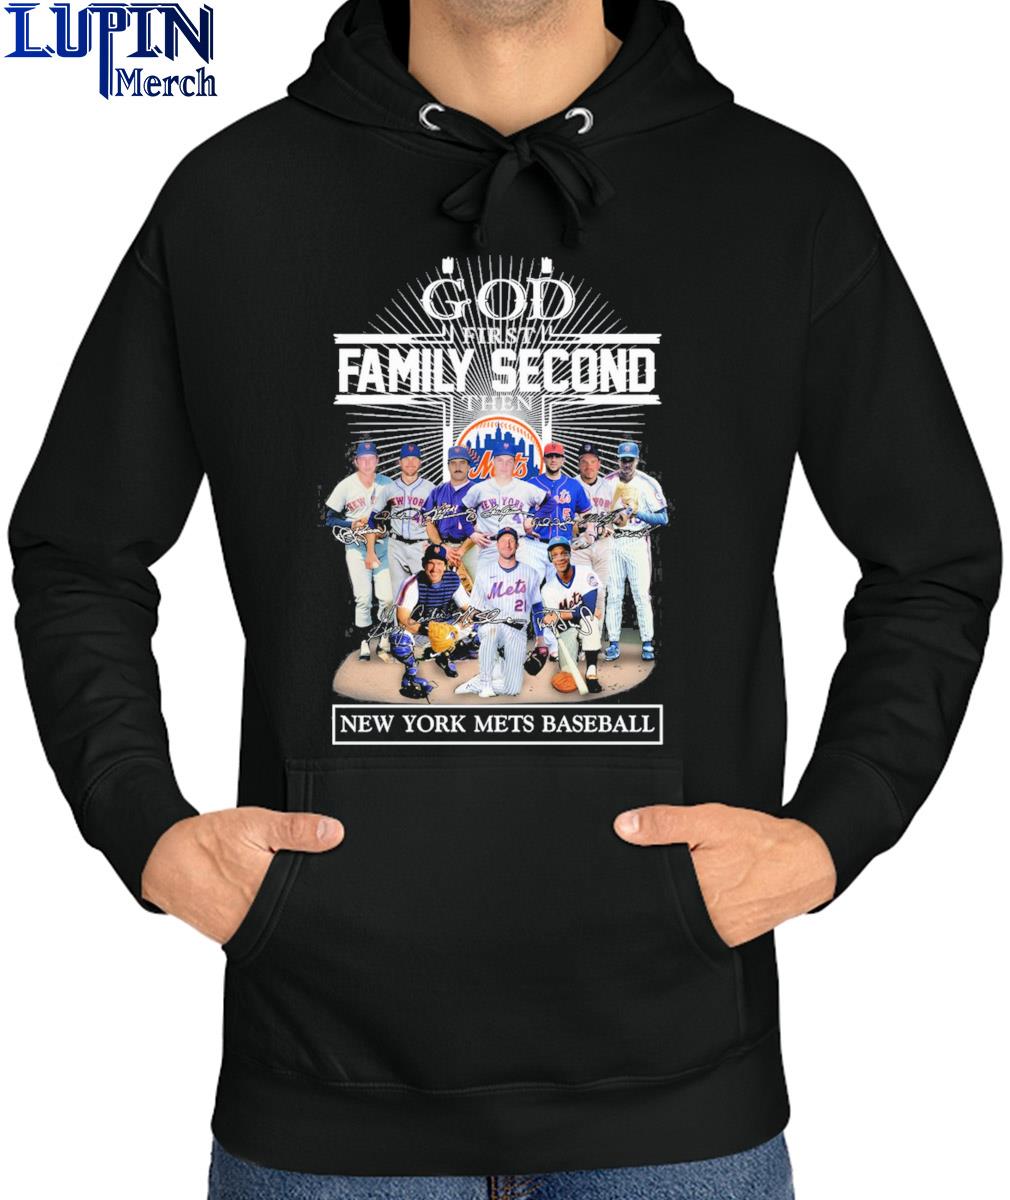 God first family second then Atlanta Braves baseball shirt, hoodie